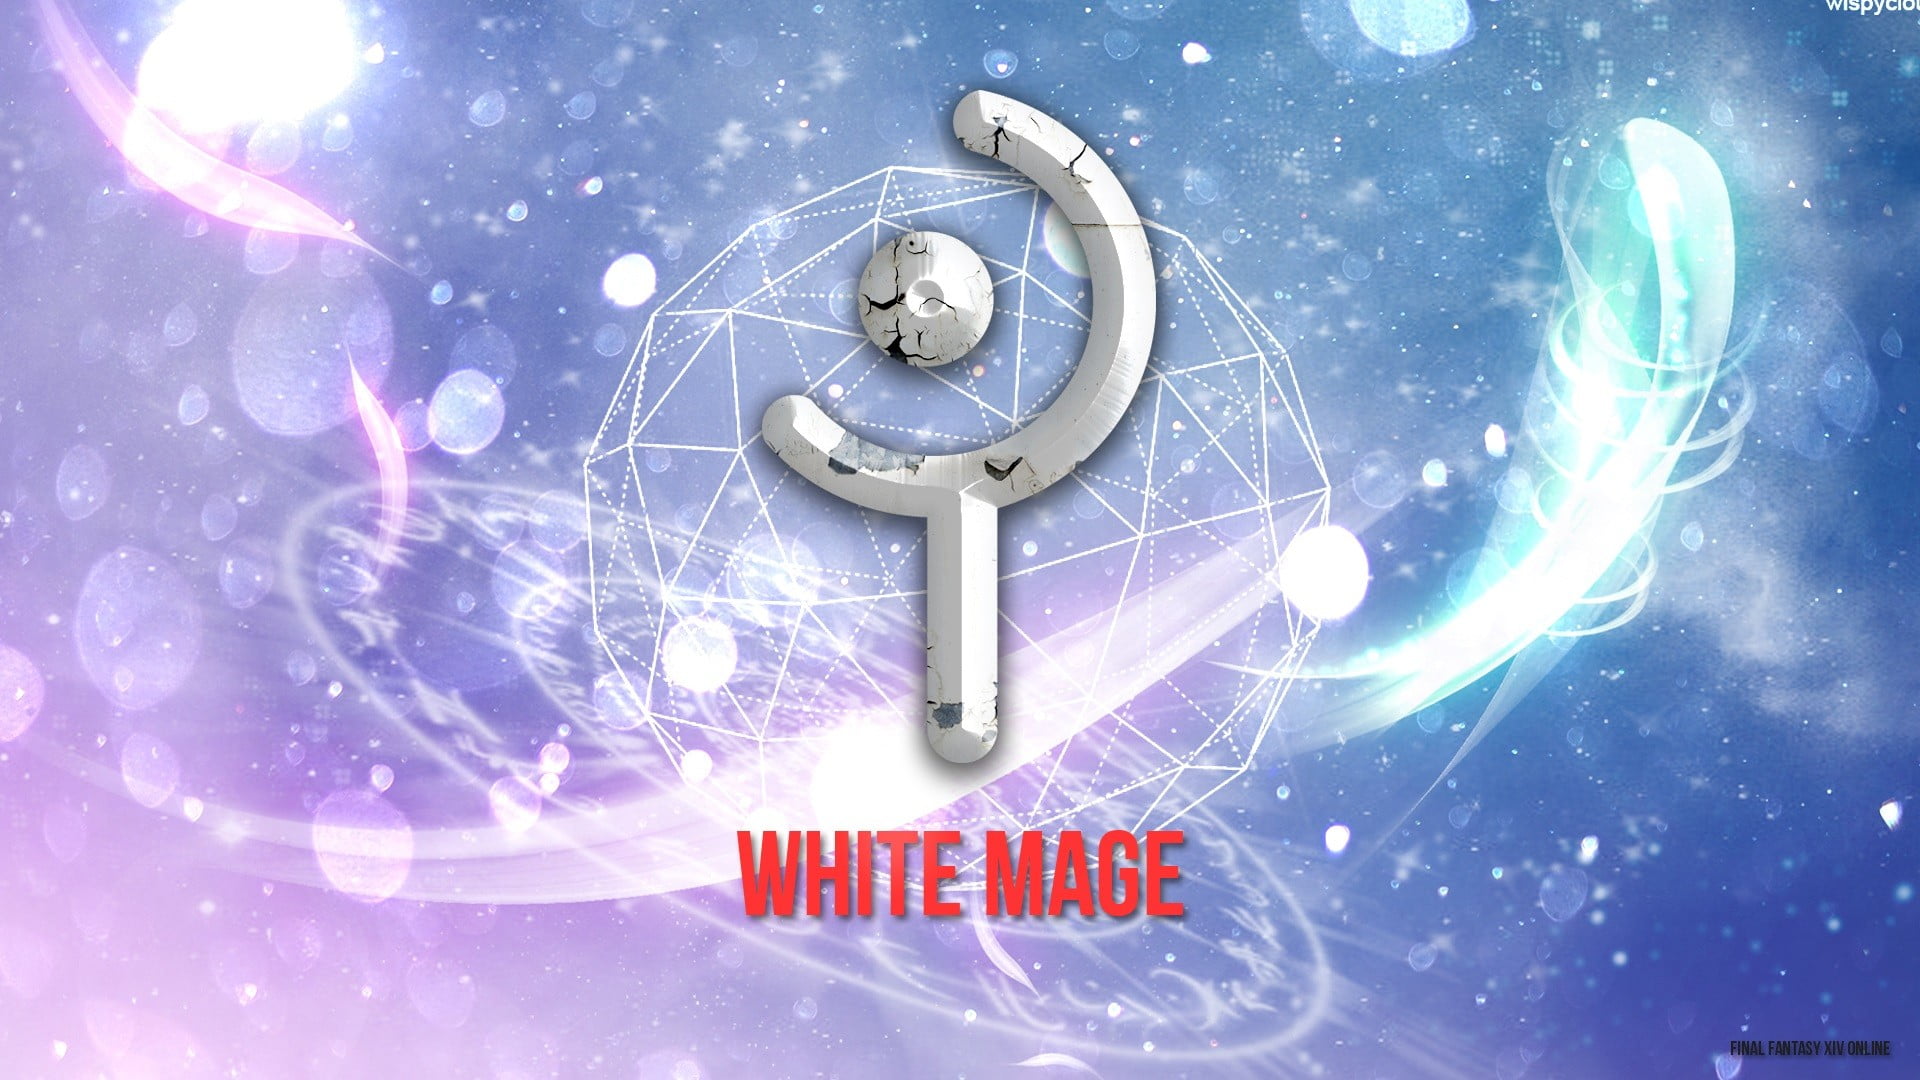 White Mage symbol, Final Fantasy XIV: A Realm Reborn, video games, Eorzea Cafe 